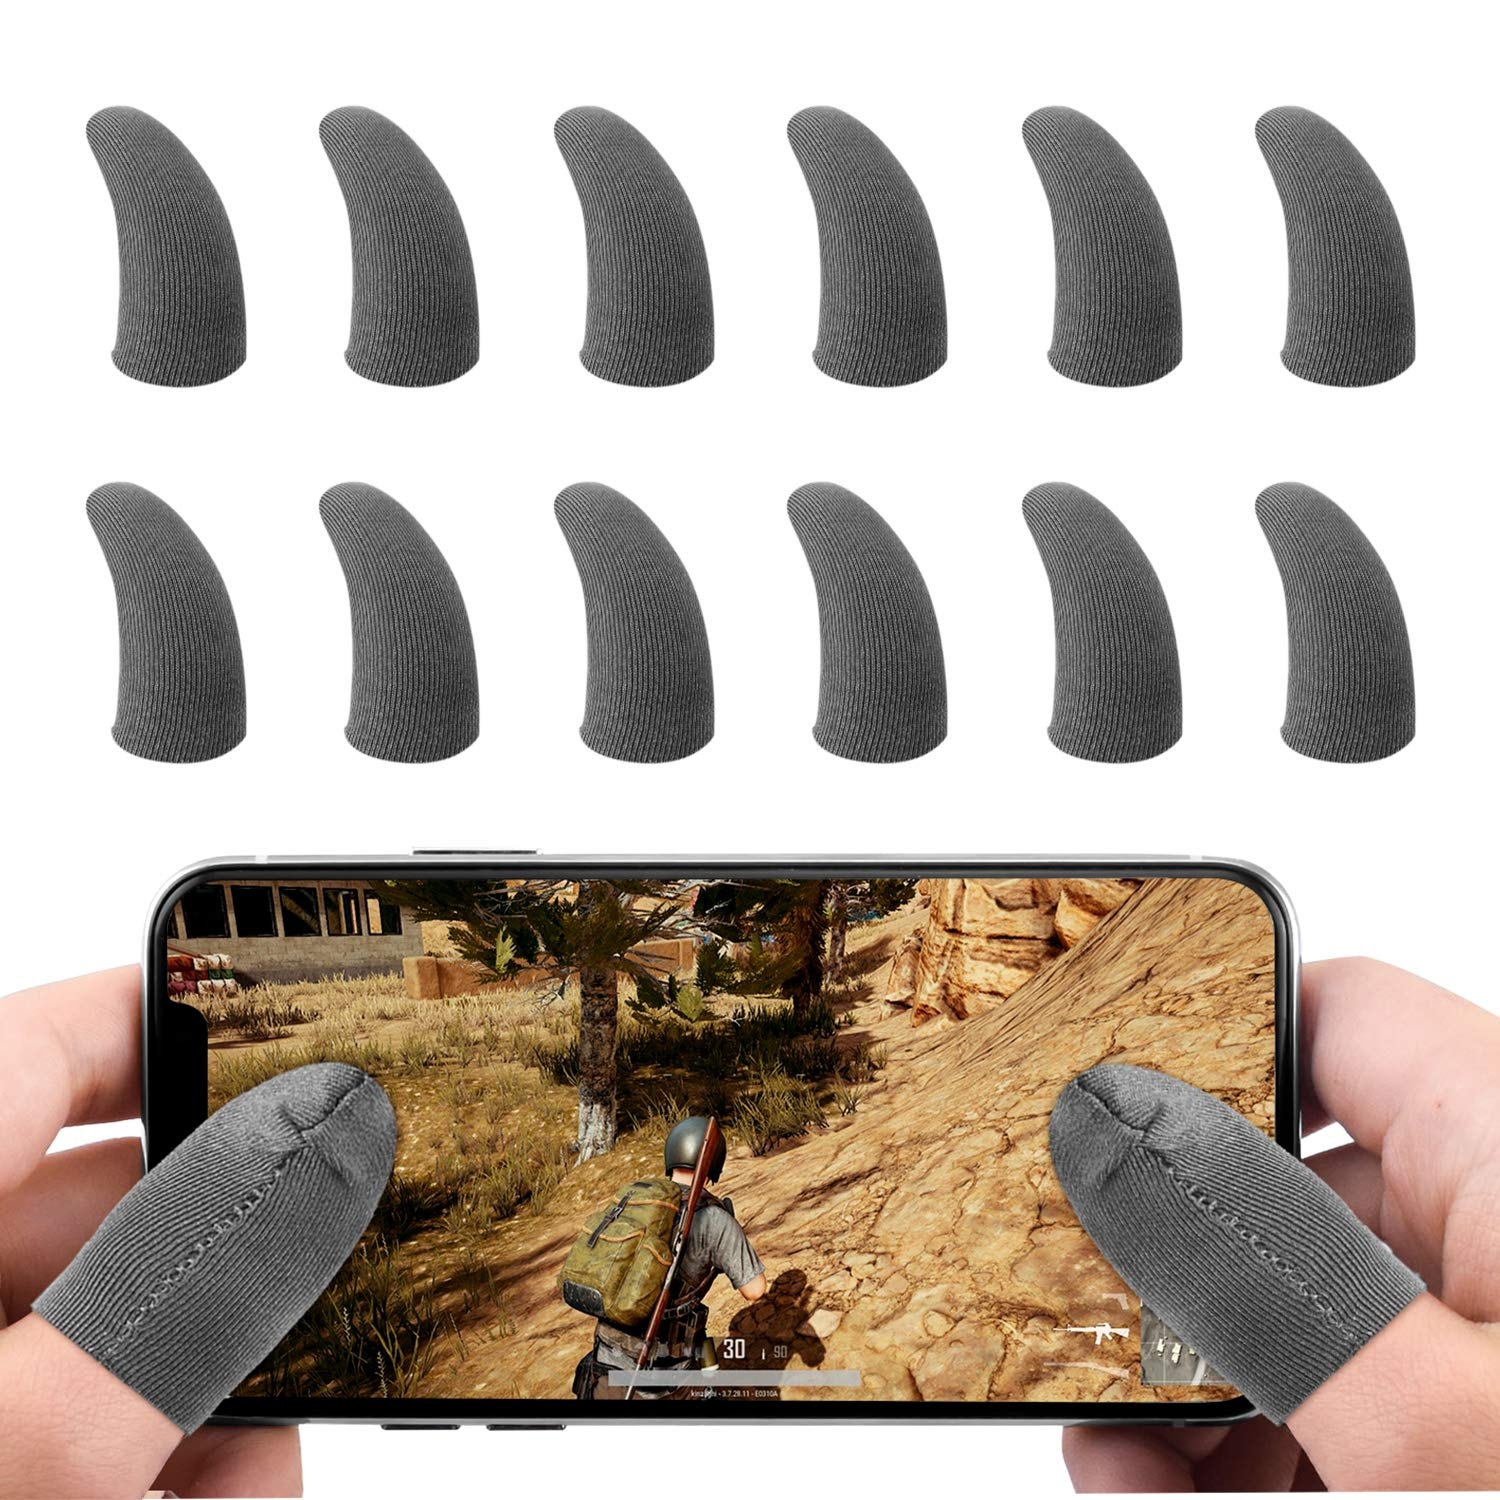 DLseego PUBG Mobile Game Controller Finger Sleeve Sets [12 Pack], Glattes Dünnes Atmungsaktiv Anti-Sweat-Empfindliche Voll Touch Screen-Joystick-Finger Set für Knives Out/Rules of Survival